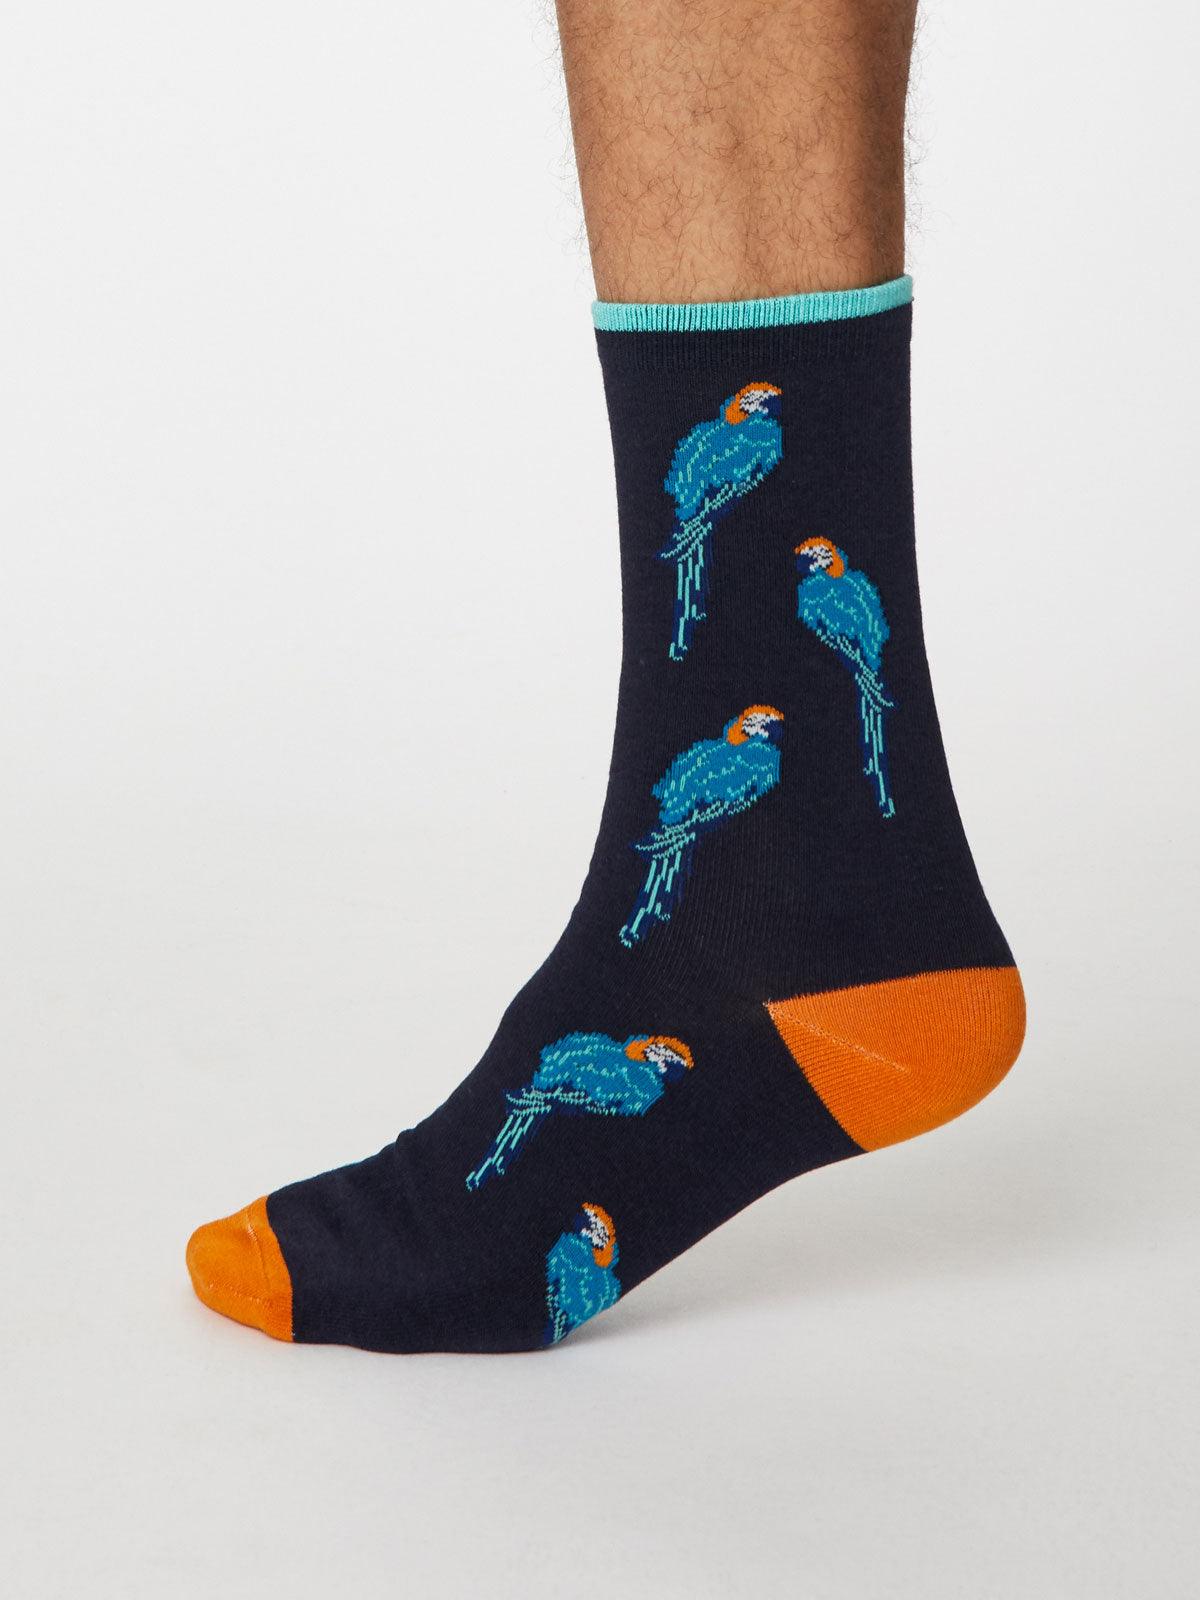 Pappagallo Bamboo Parrot Socks - Dark Navy - Thought Clothing UK